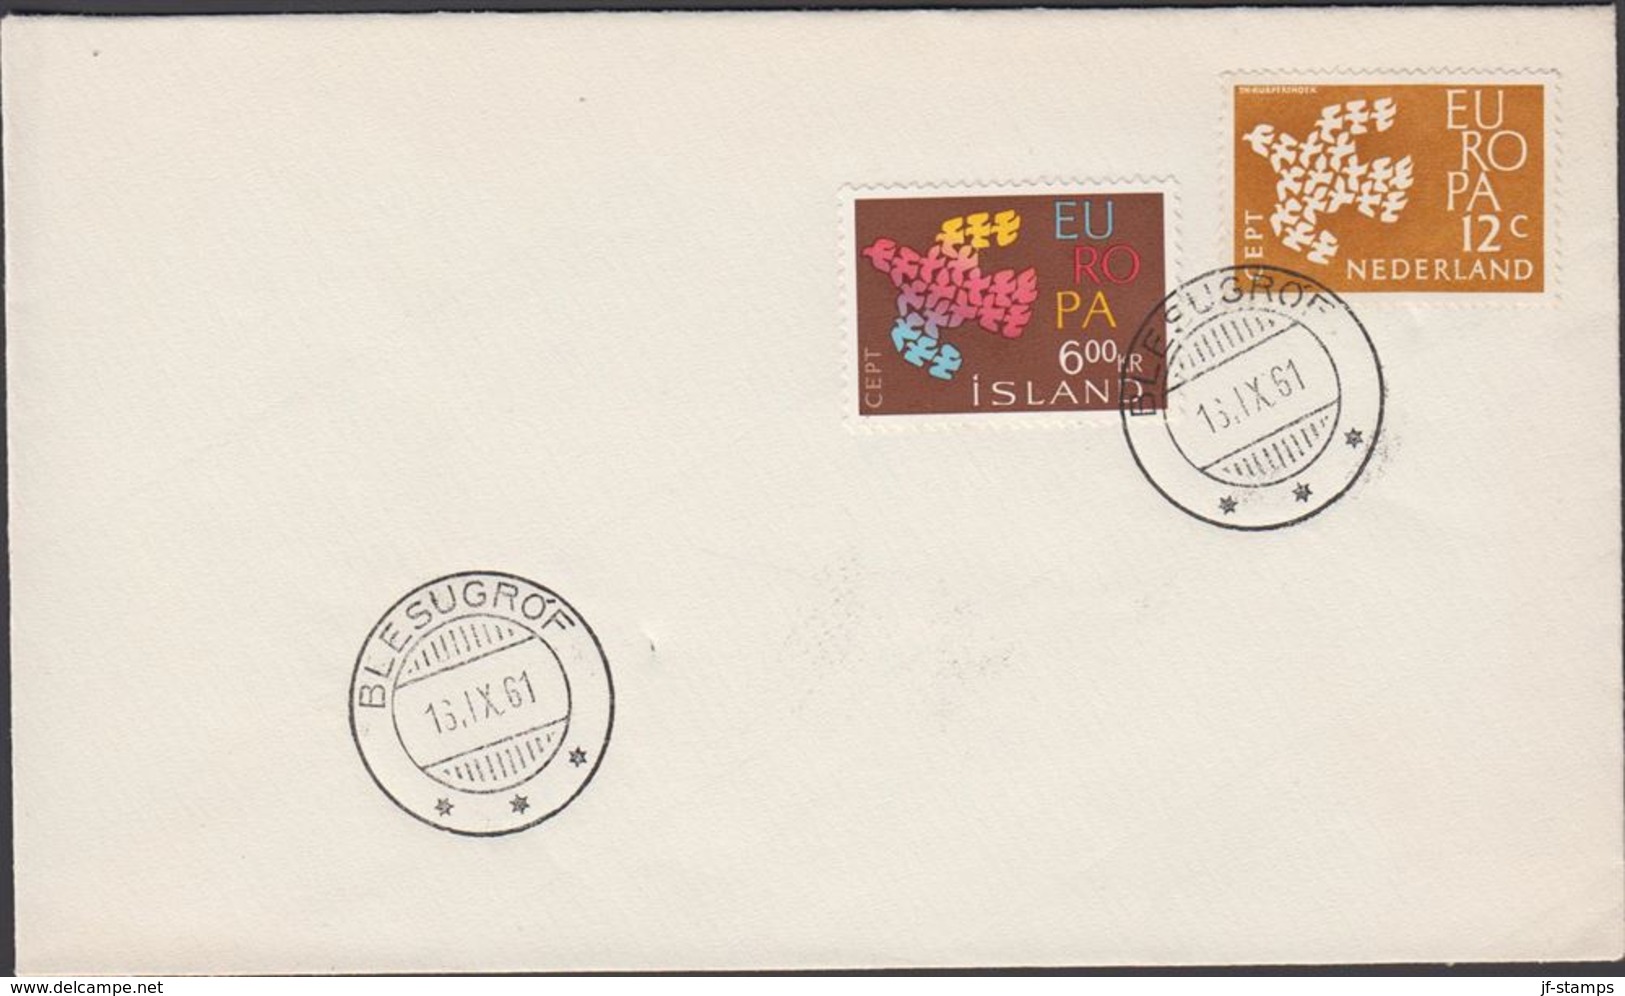 BLESUGROF 16. IX. 61 1961. Europe. CEPT. 6 Kr. + 12 C. NEDERLAND (Michel 355) - JF310158 - Lettres & Documents